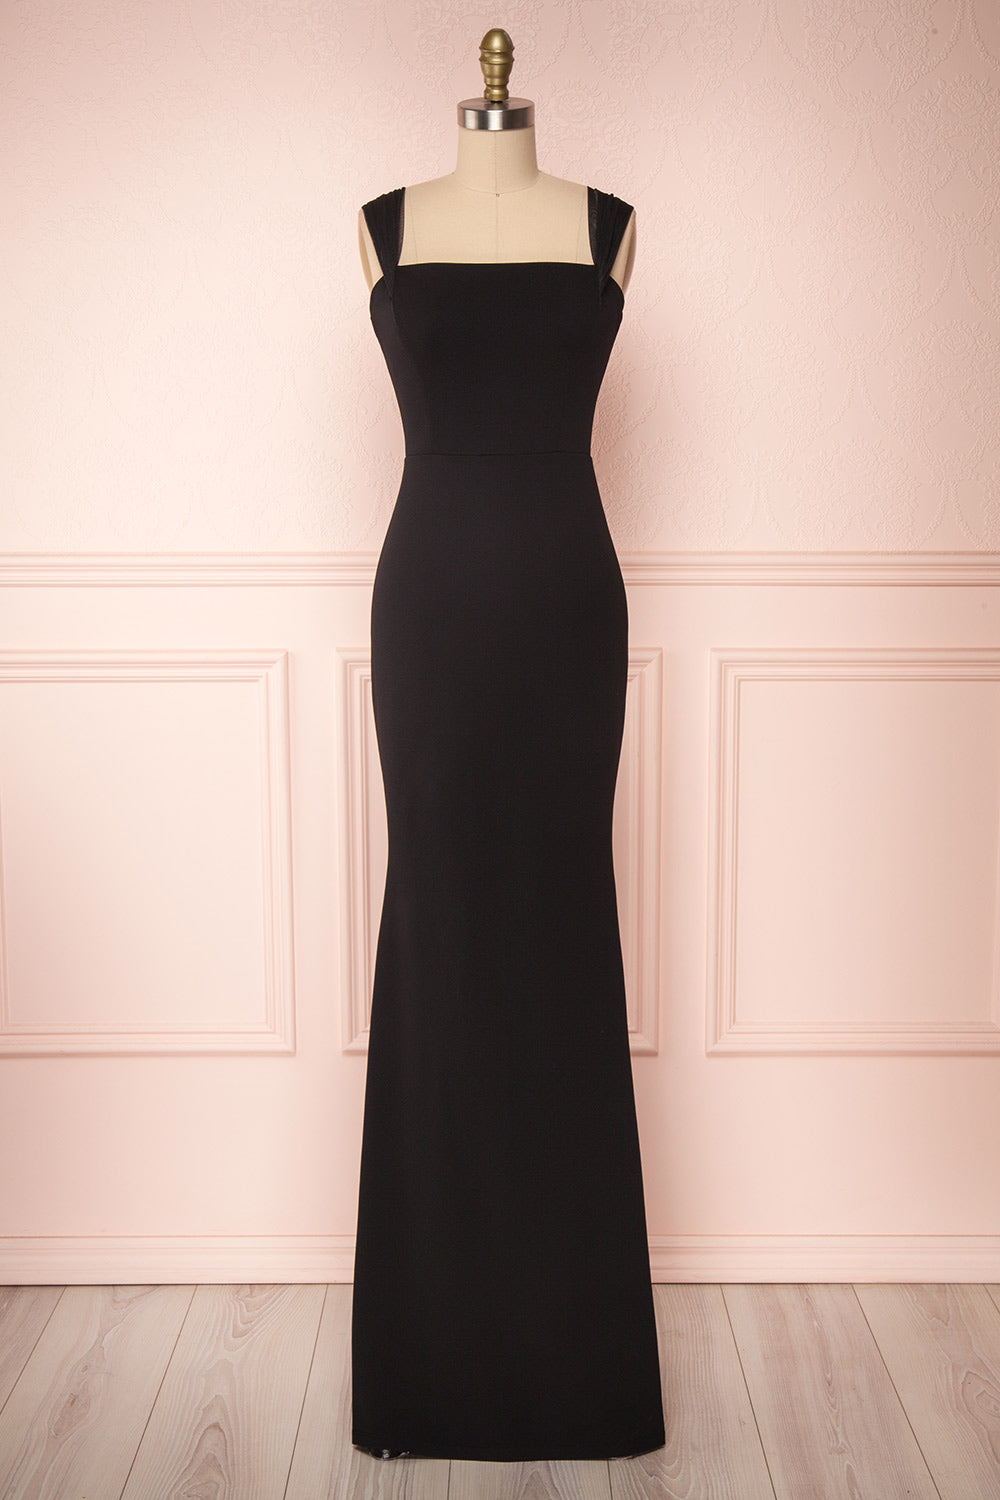 Alvery Black Mermaid Dress | Robe Maxi front view shoulder up | Boutique 1861